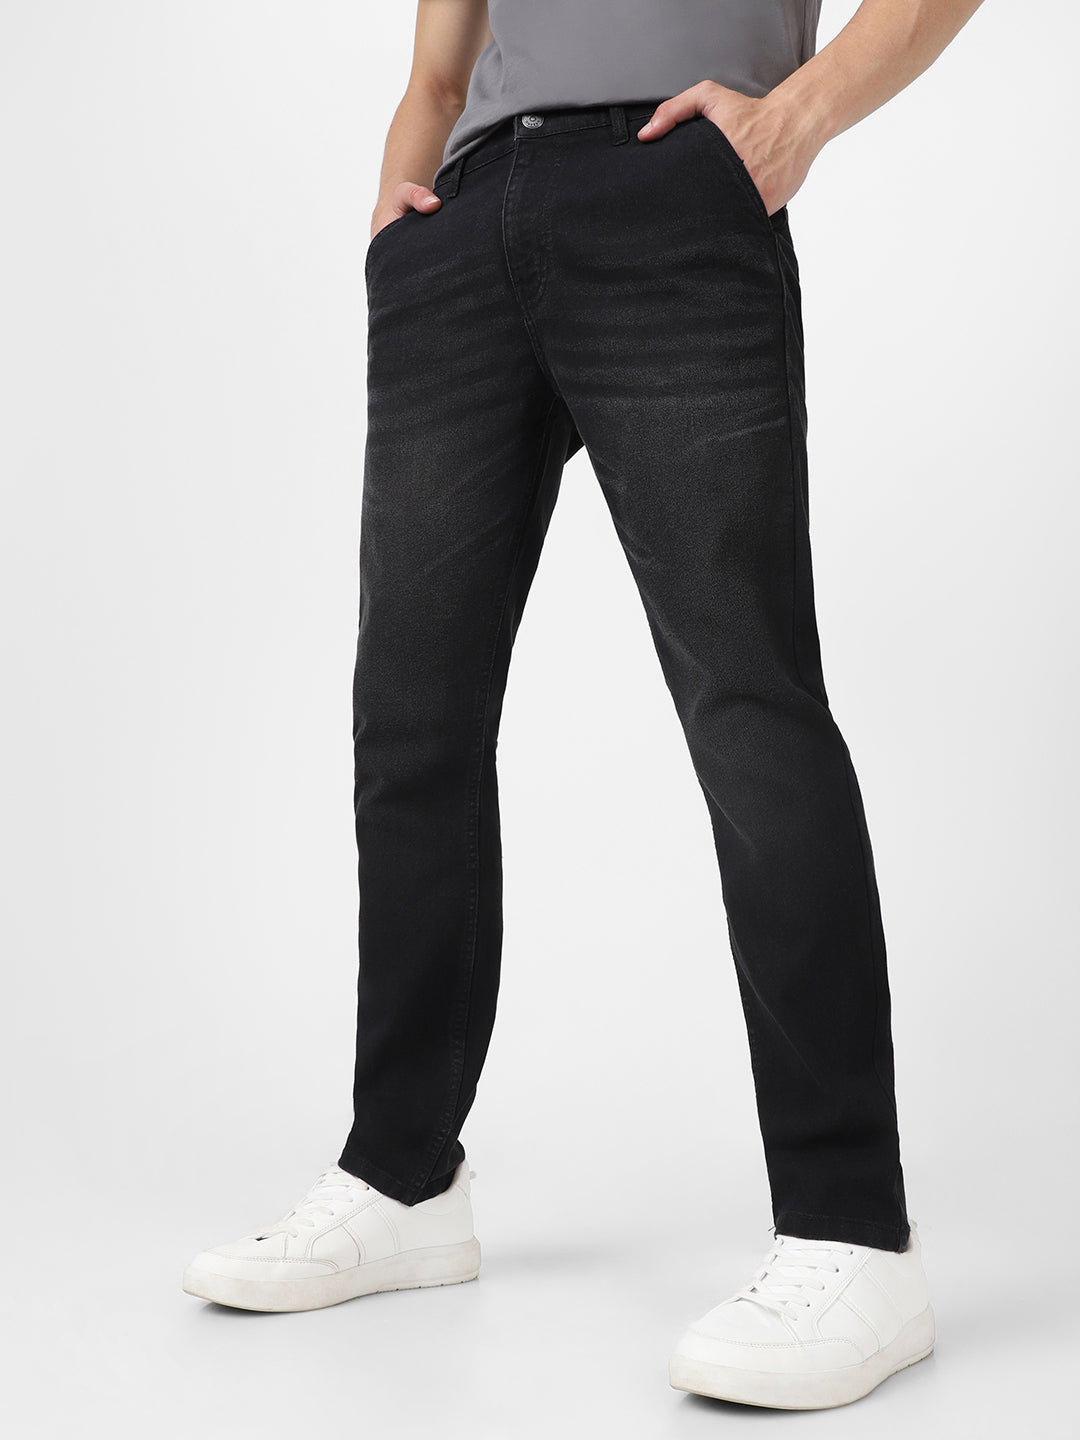 Urbano Fashion Men's Black Slim Fit Washed Jeans Stretchable